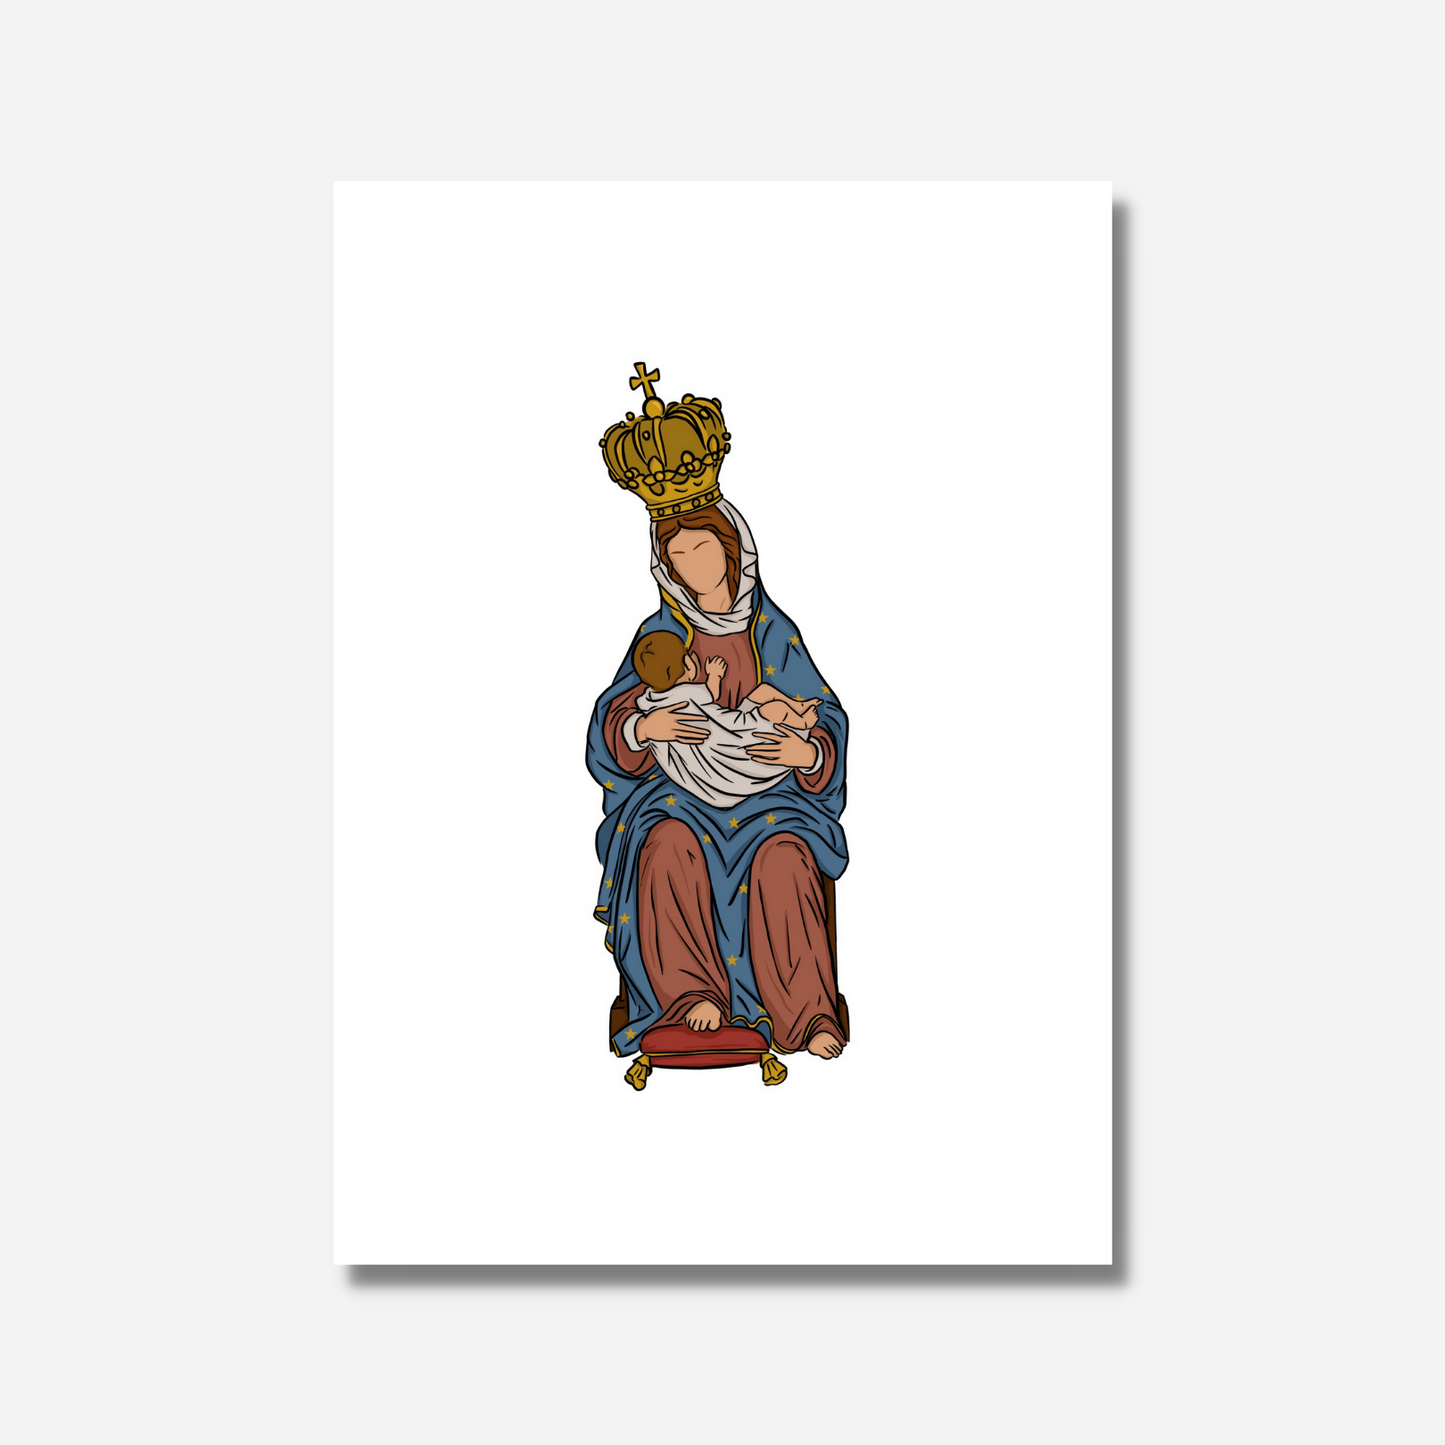 Our Lady of La Leche - 5"x7" Print